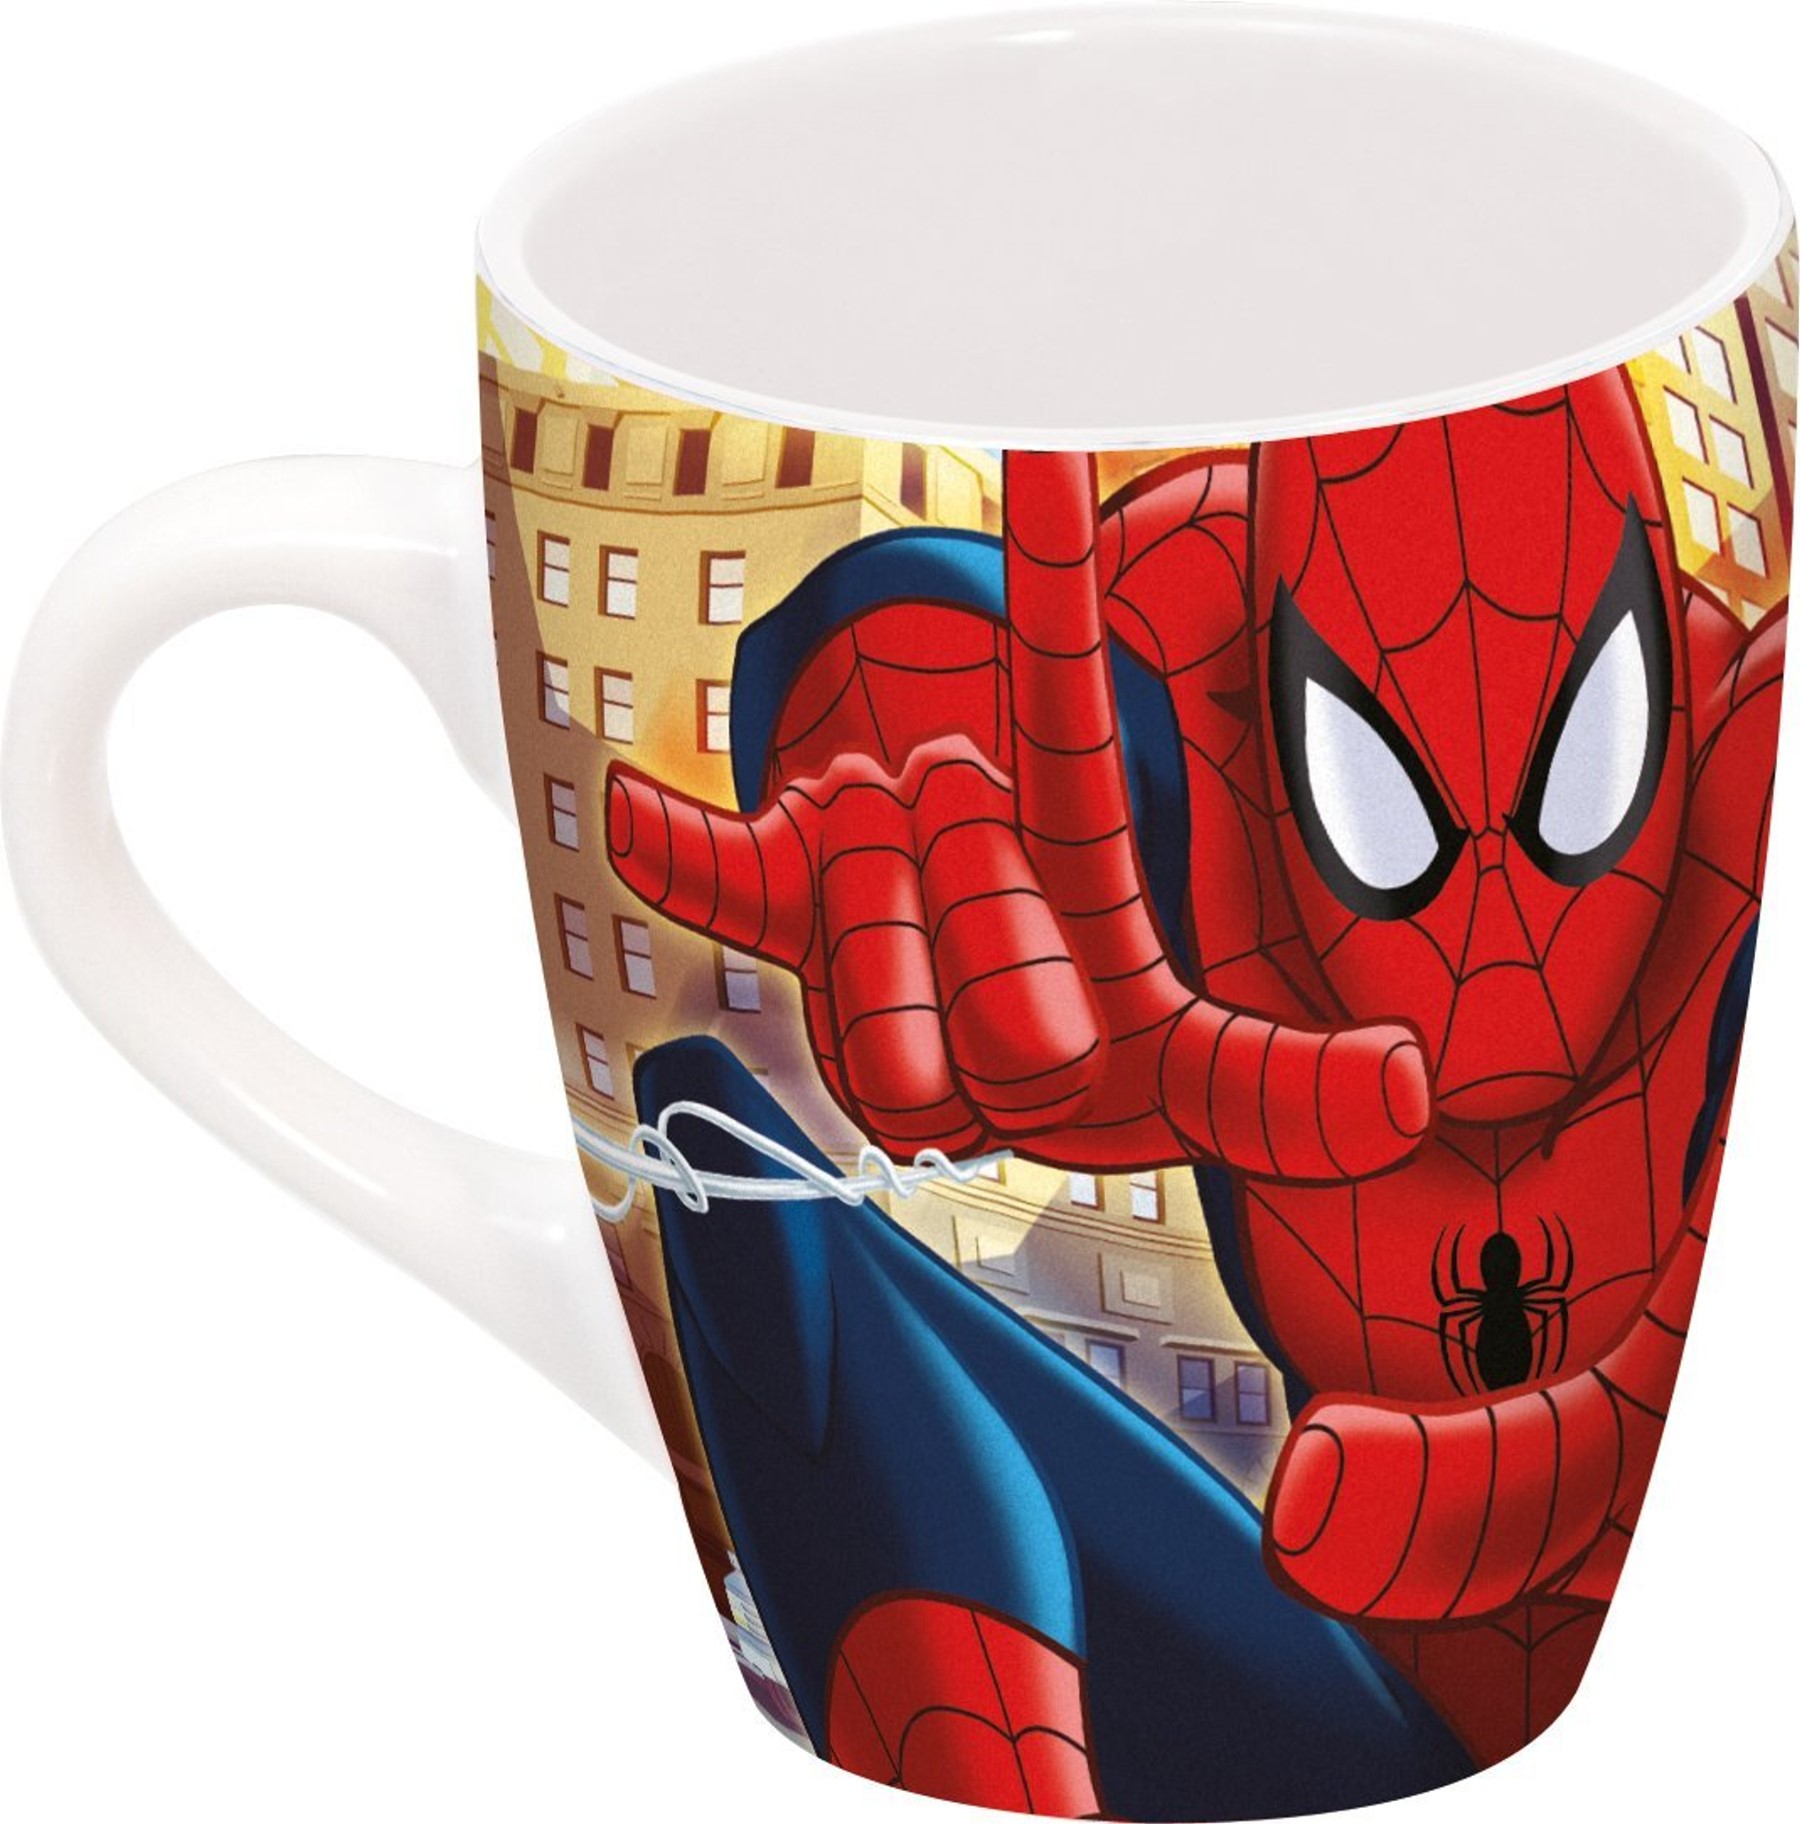 Spiderman Barrel Mug 70591 b.jpg  by Thingimijigs